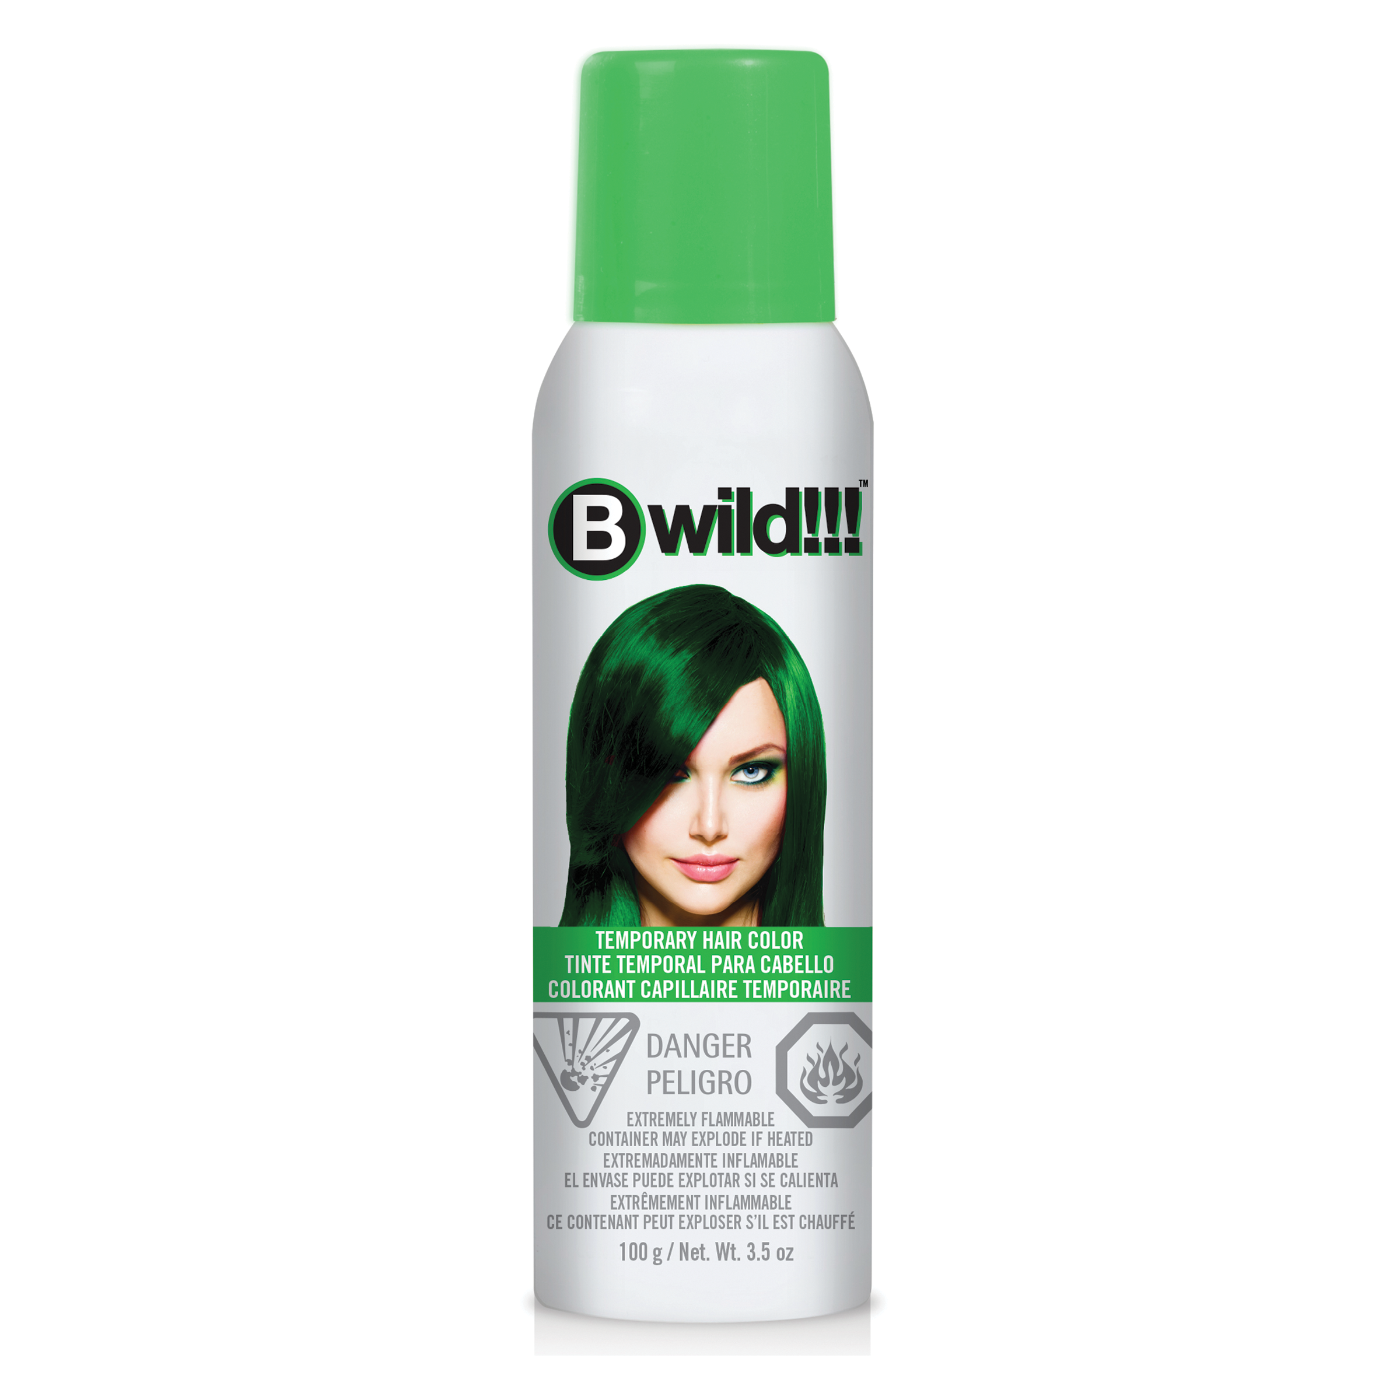 B Wild Temporary Hair Color Spray - Jaguar Green